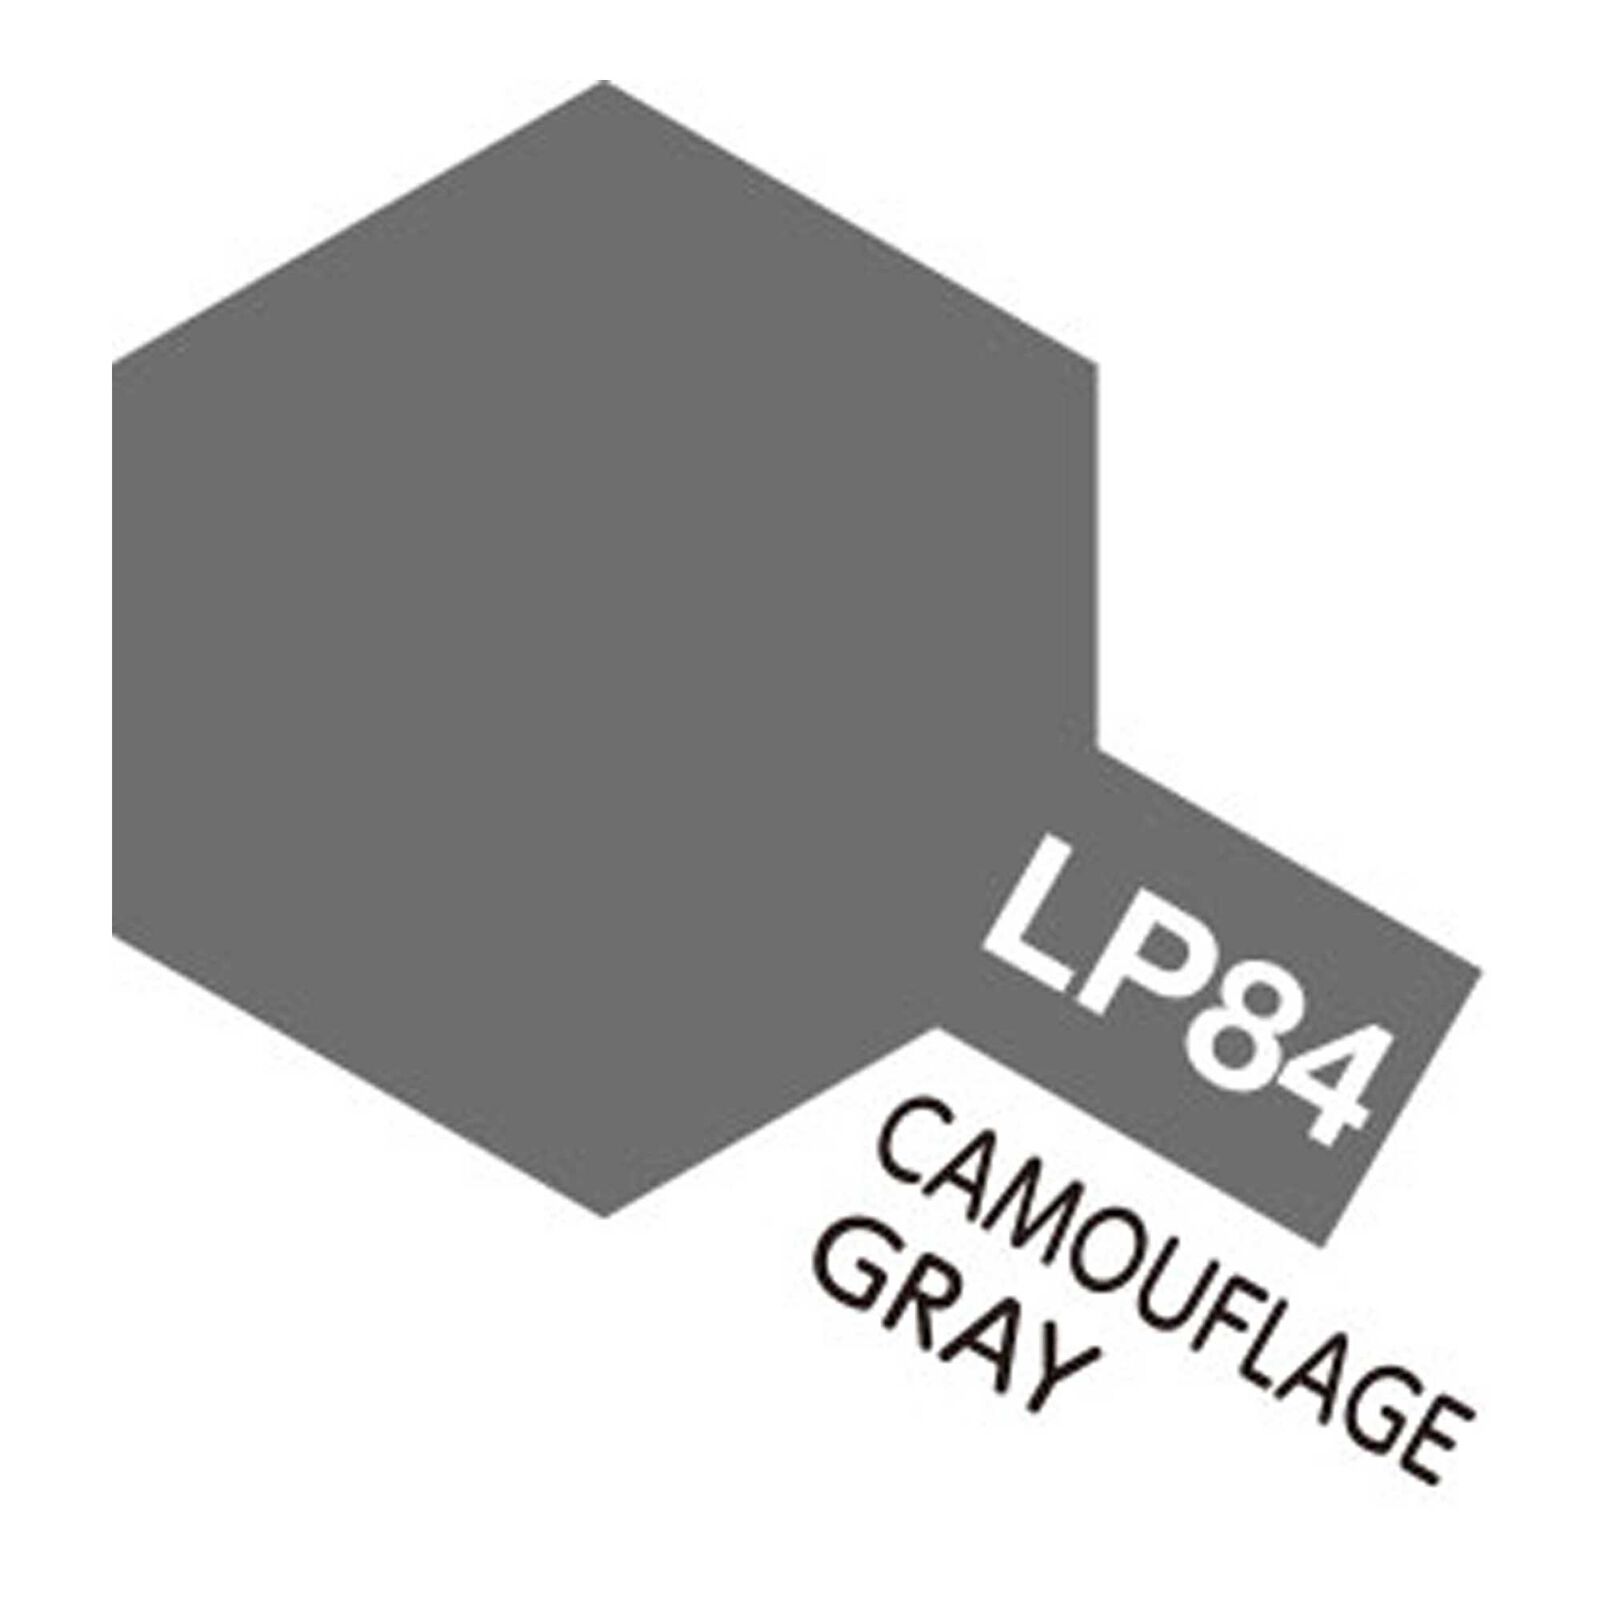 LP-84 Camouflage Gray